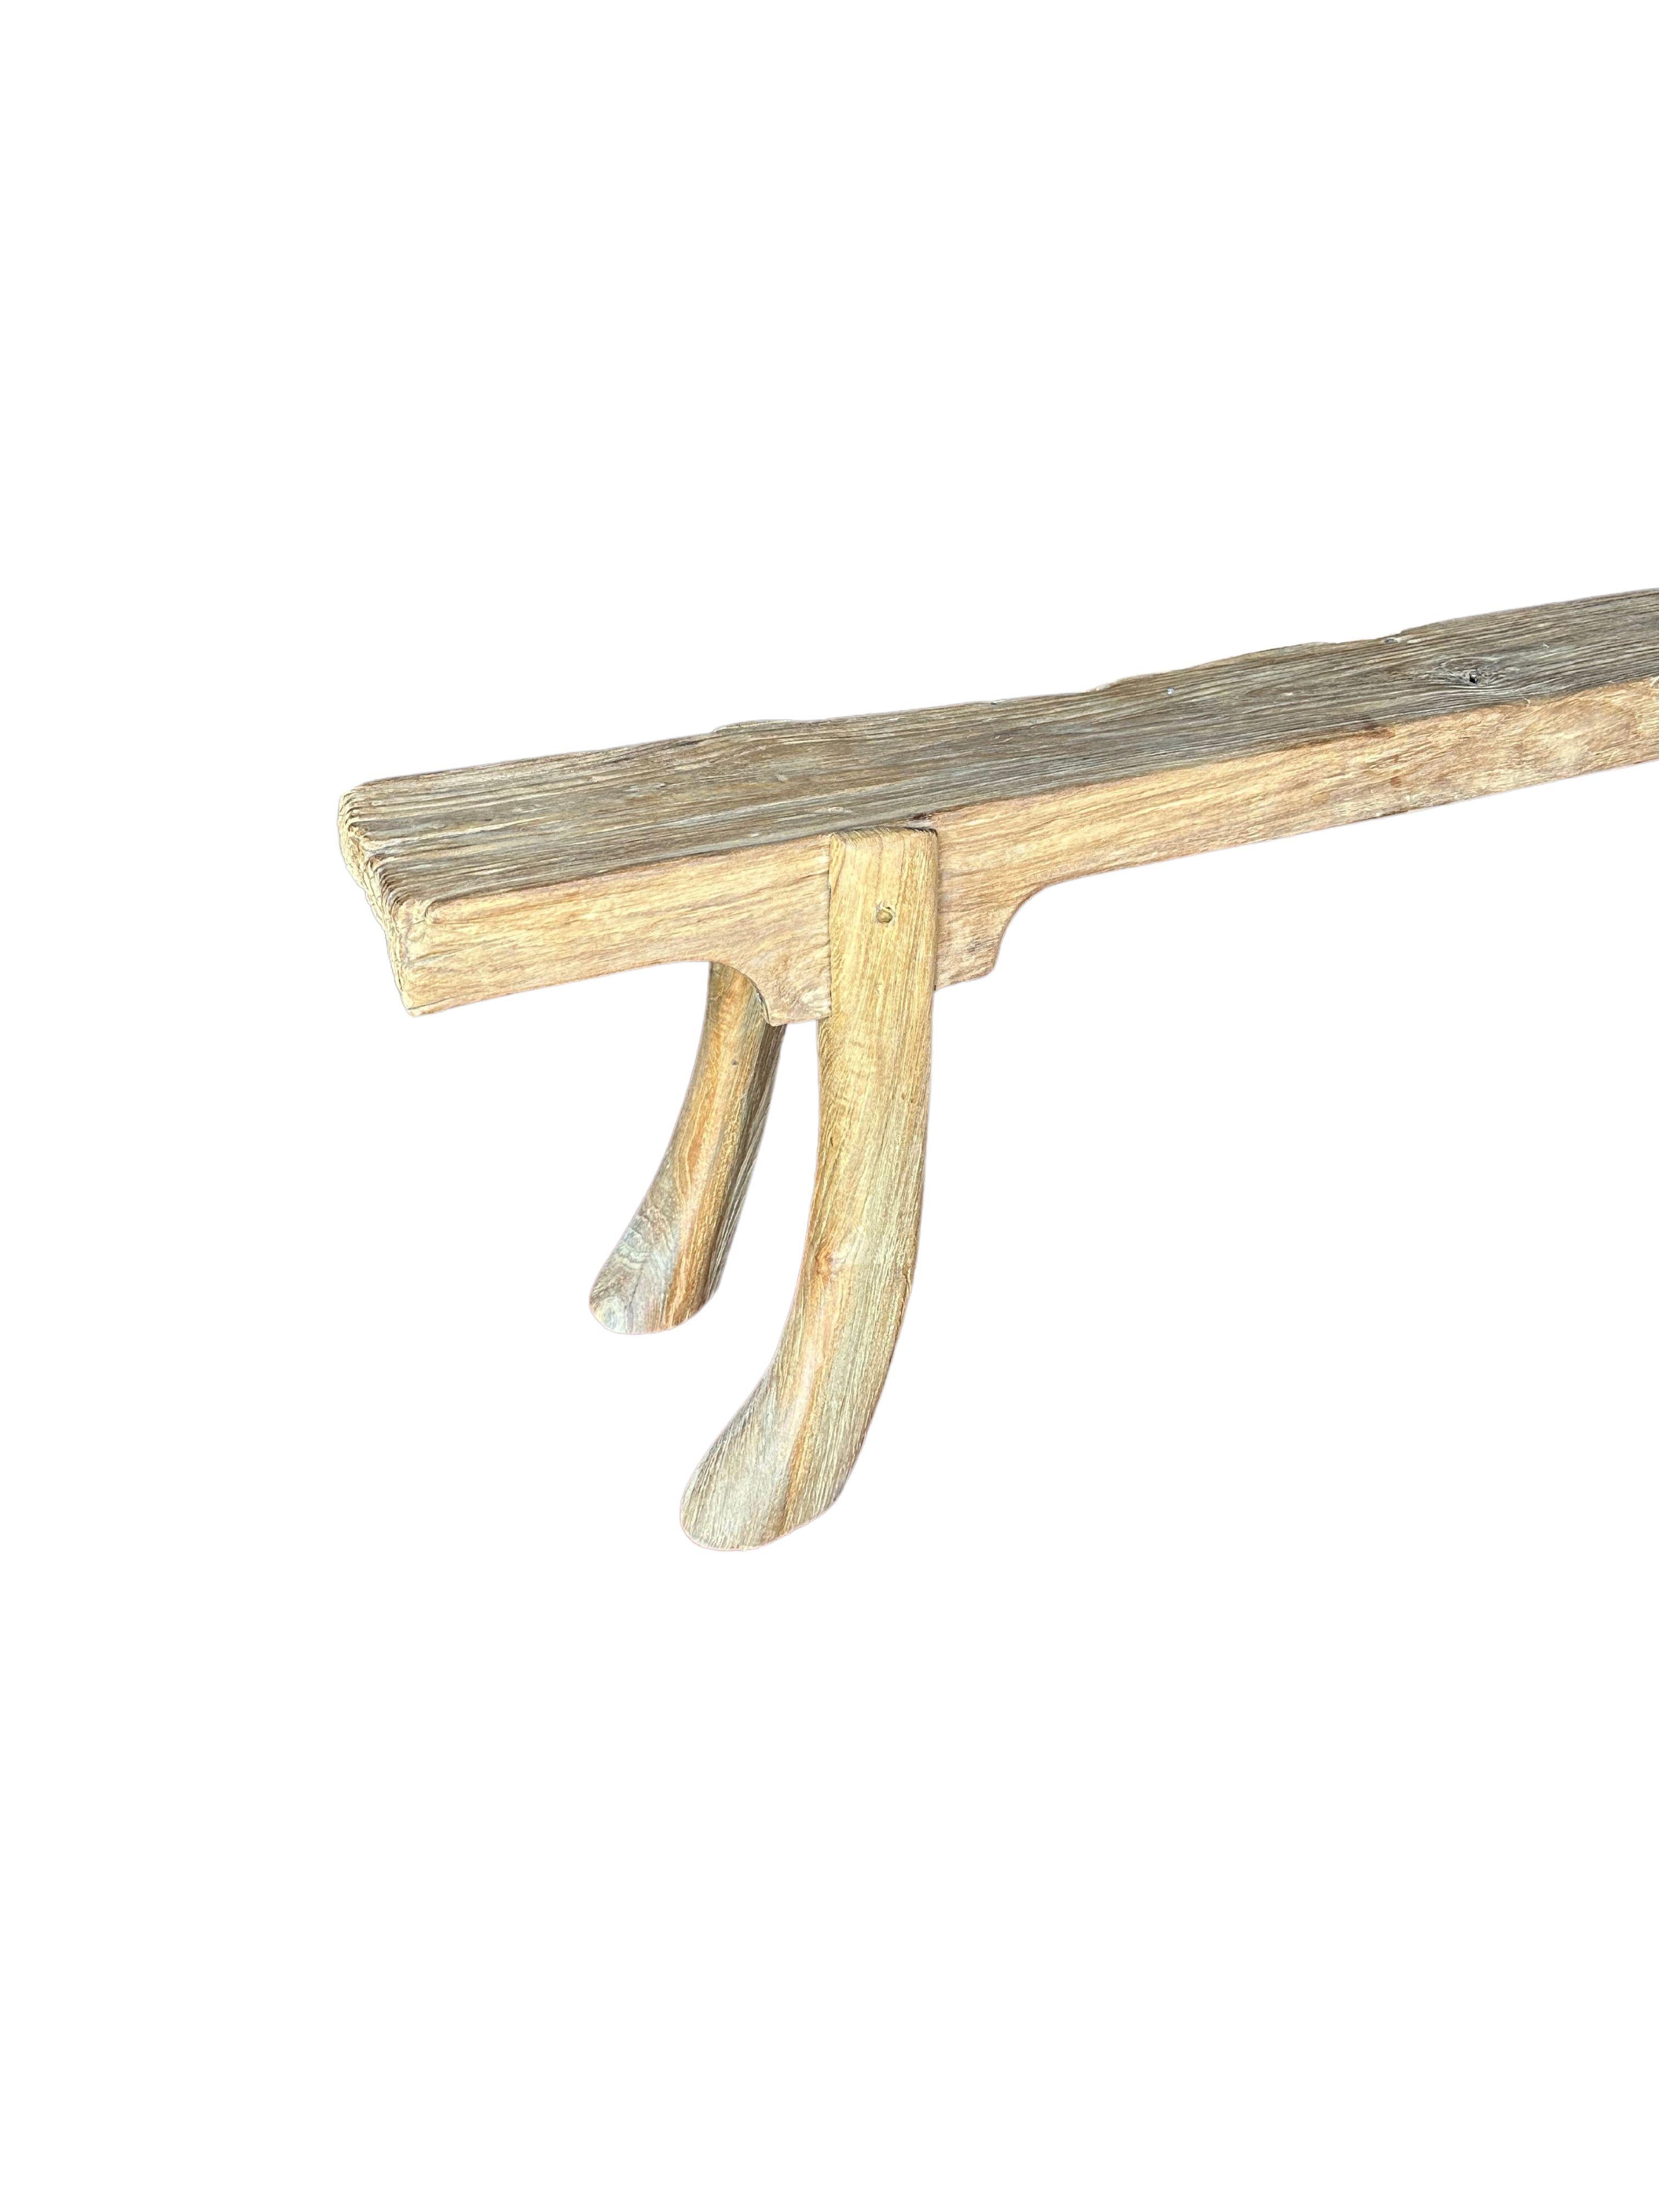 Hand-Carved Teak Wood Sculptural Bench Modern Organic For Sale